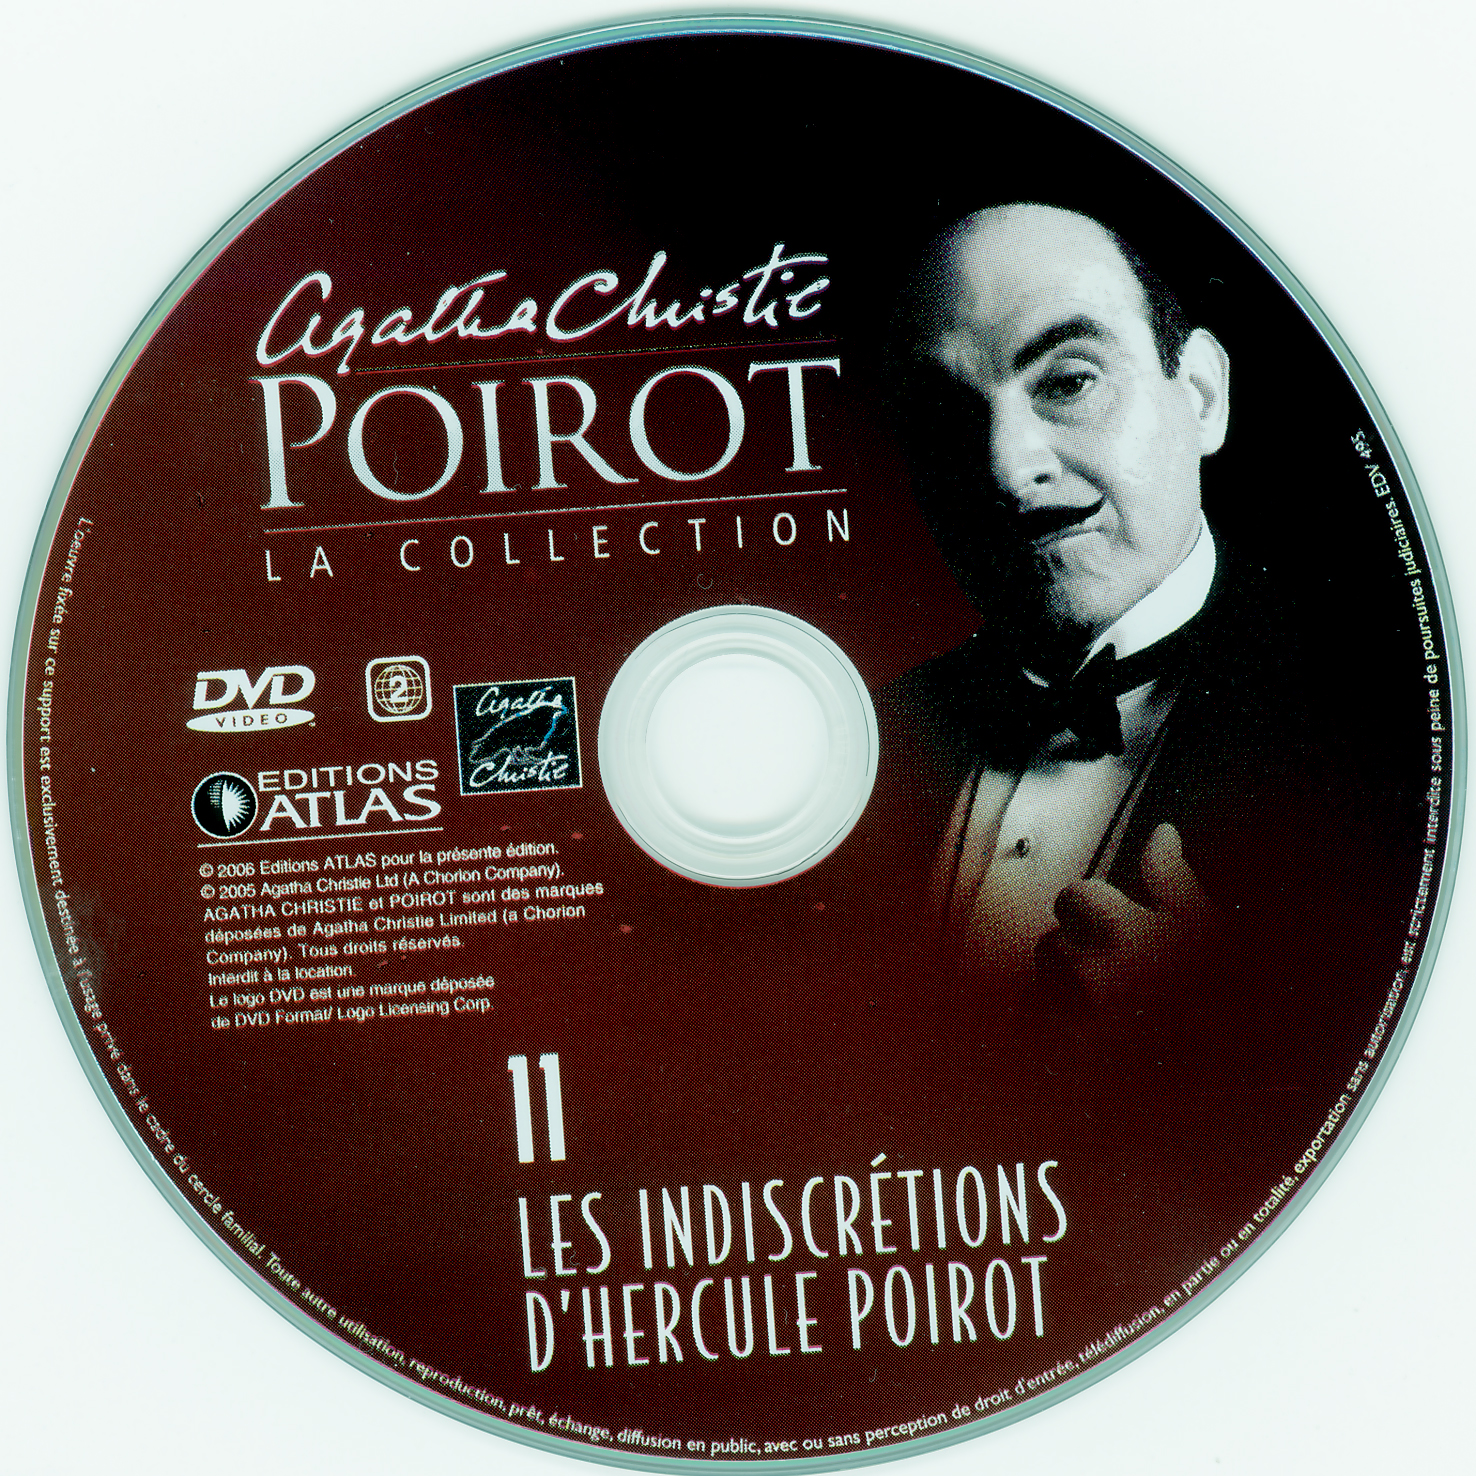 Hercule Poirot vol 11